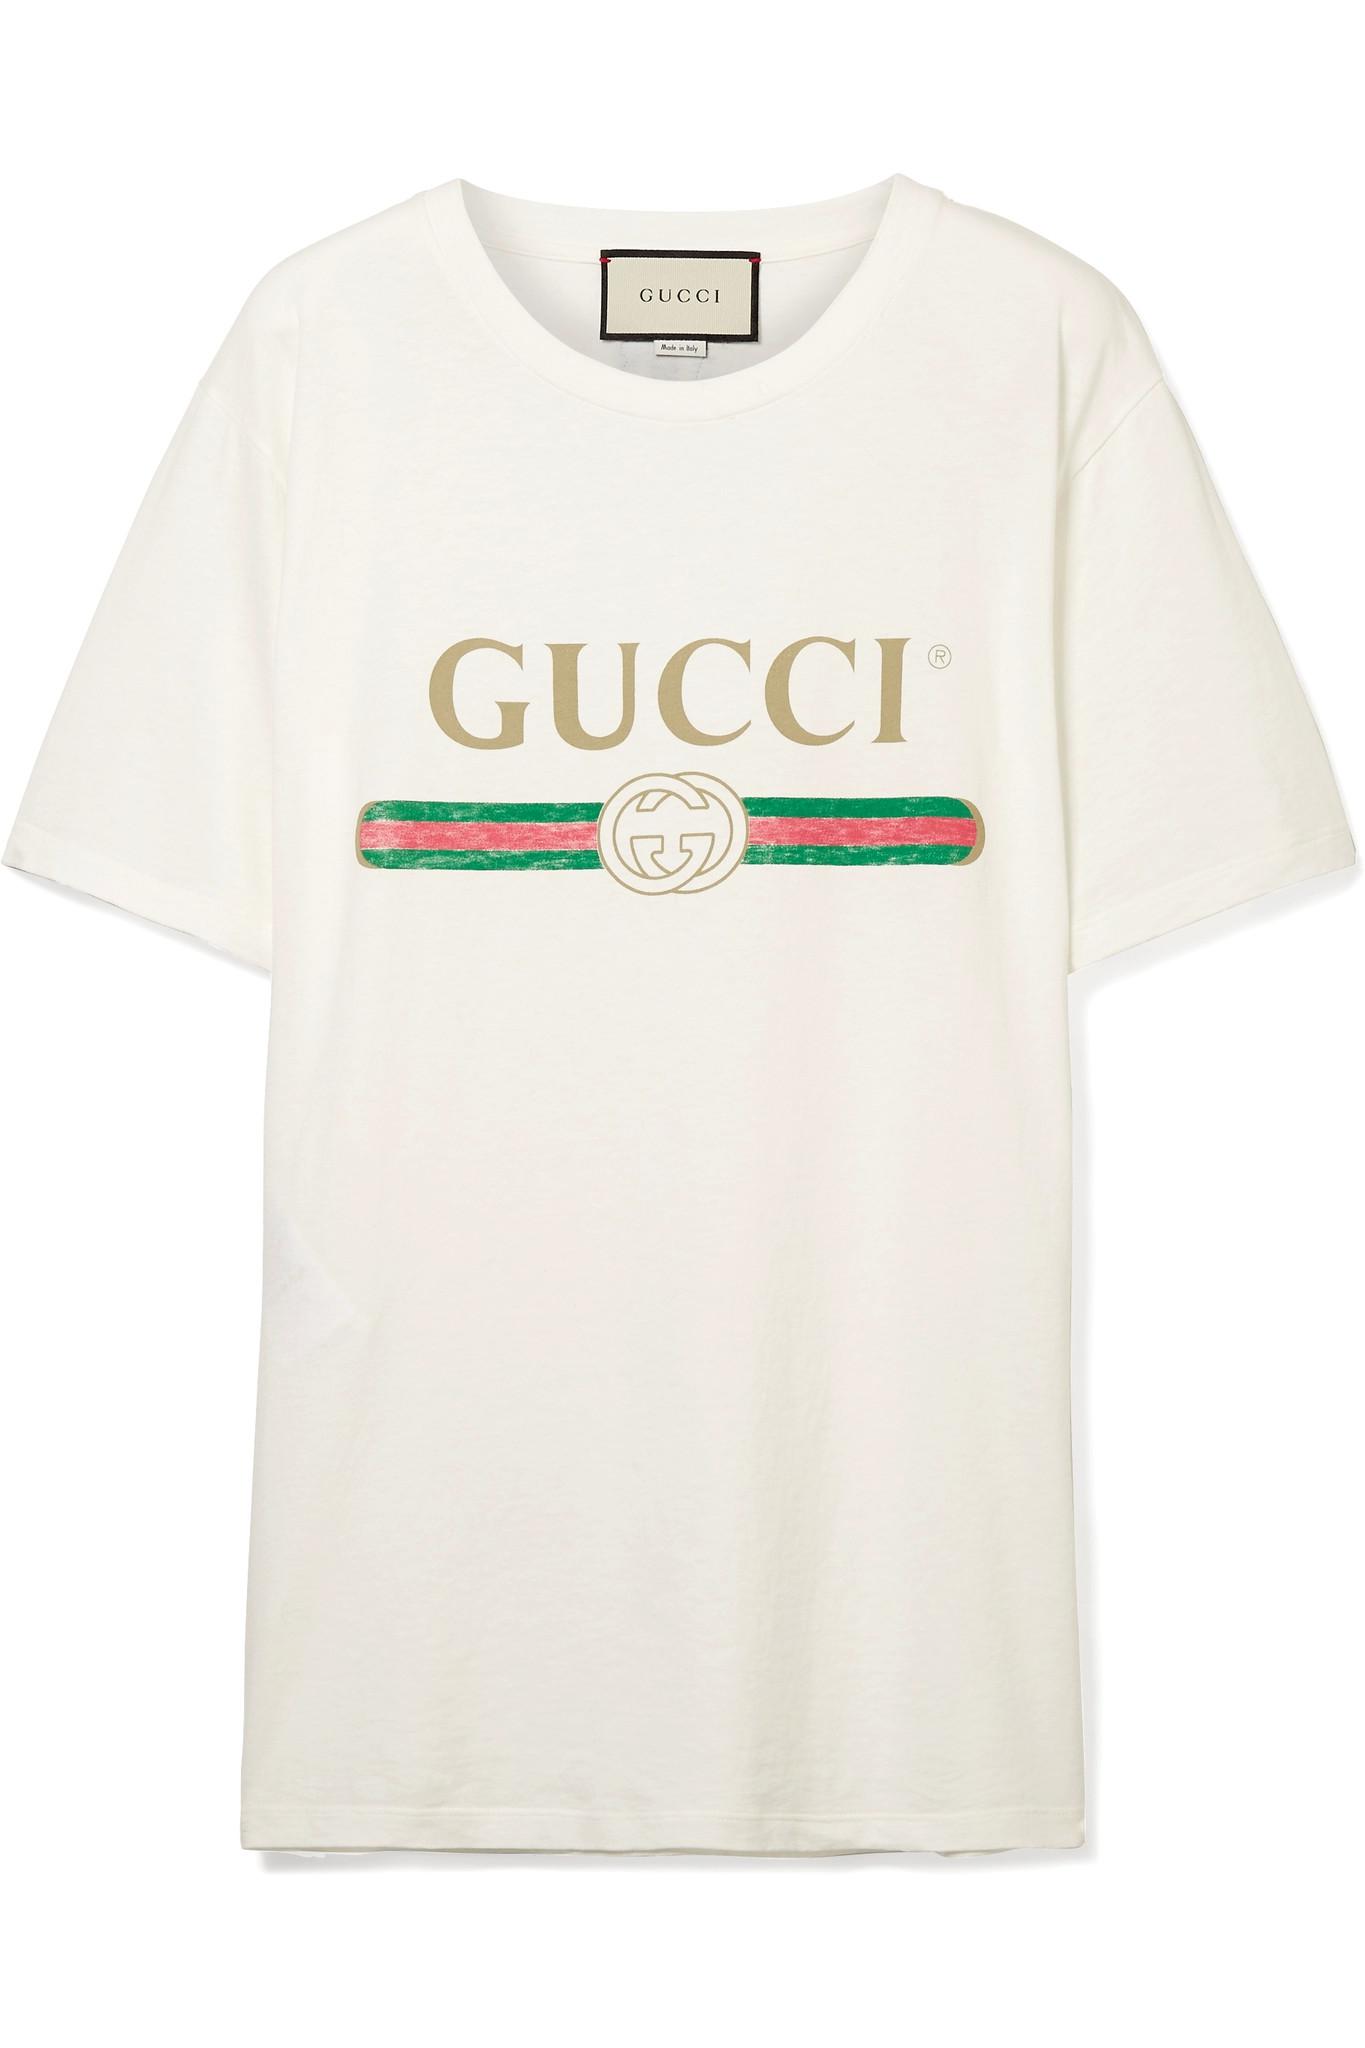 Gucci Appliquéd Distressed Printed Cotton-jersey T-shirt ...